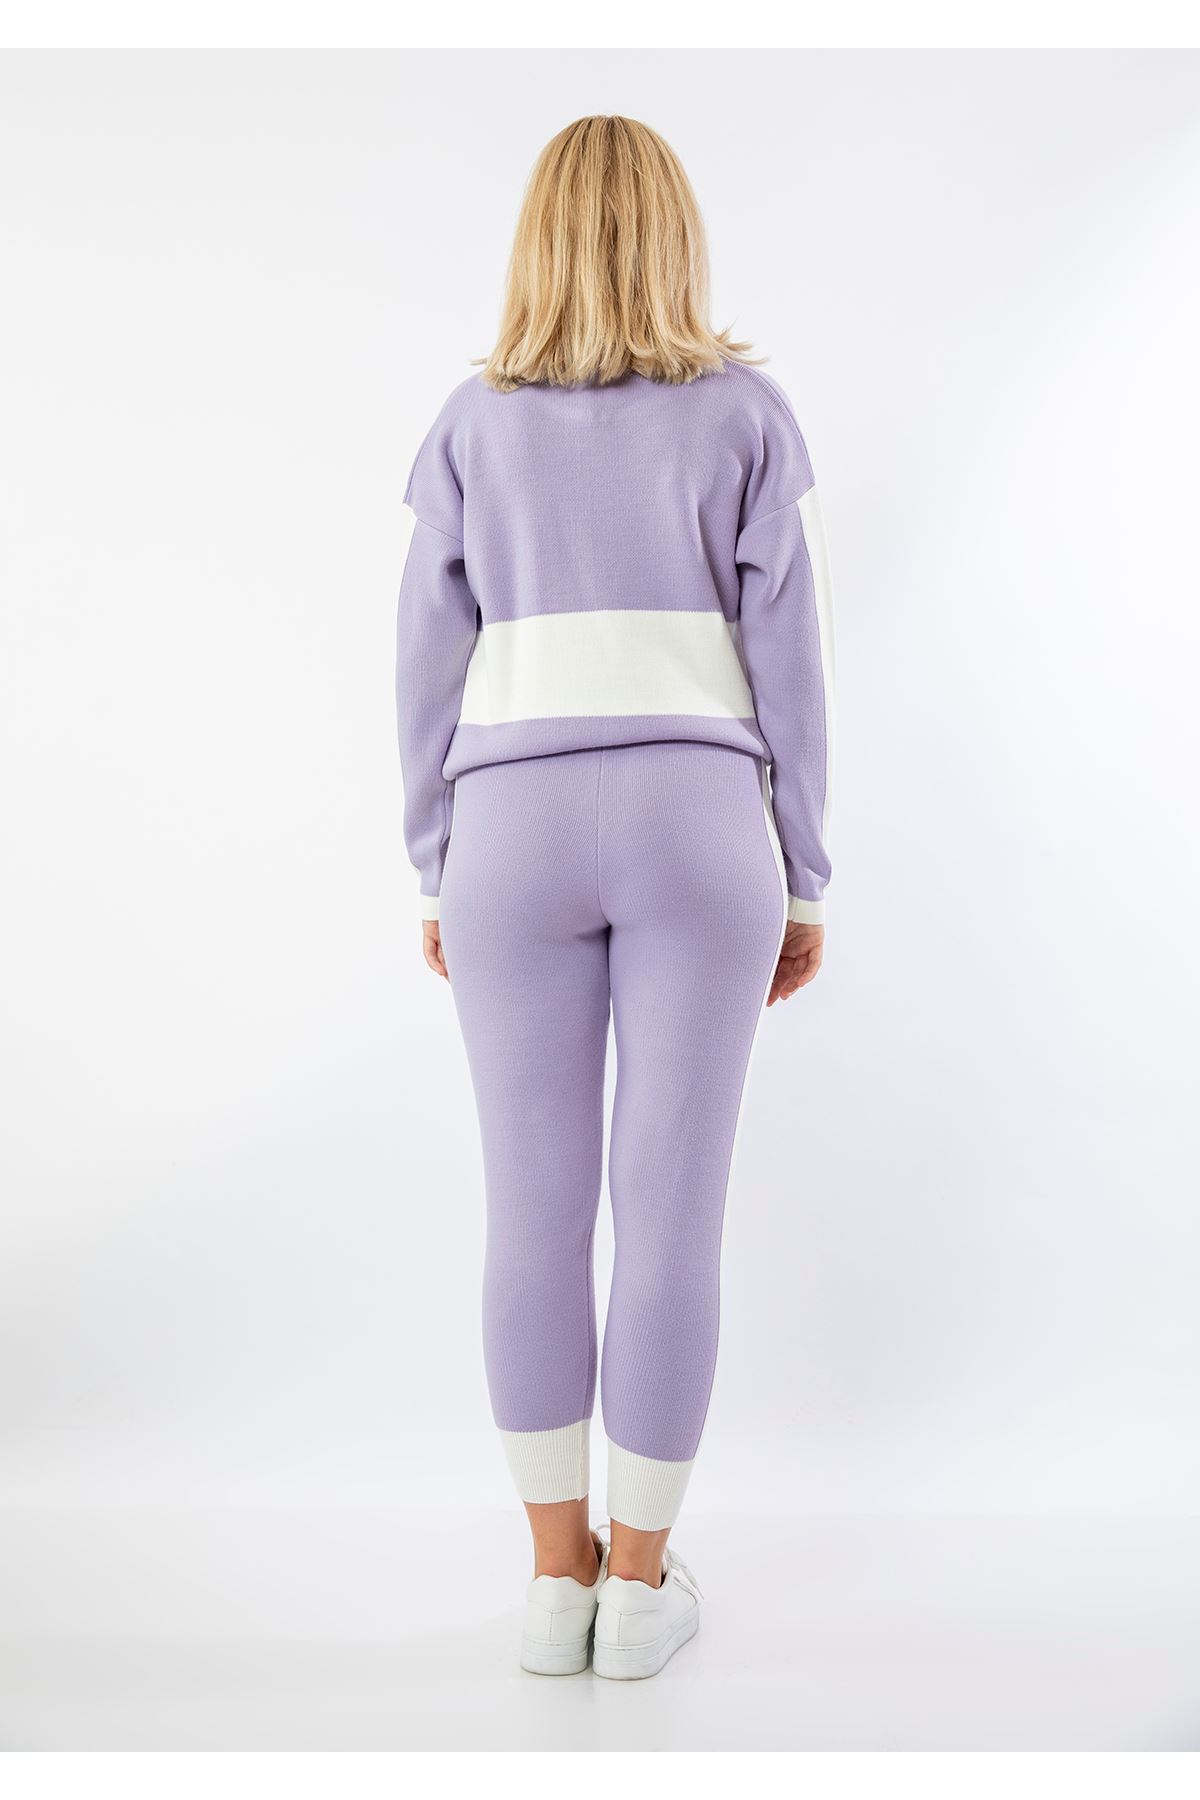 Knitwear Fabric Long Sleeve Zip Neck Women'S Set - Lilac